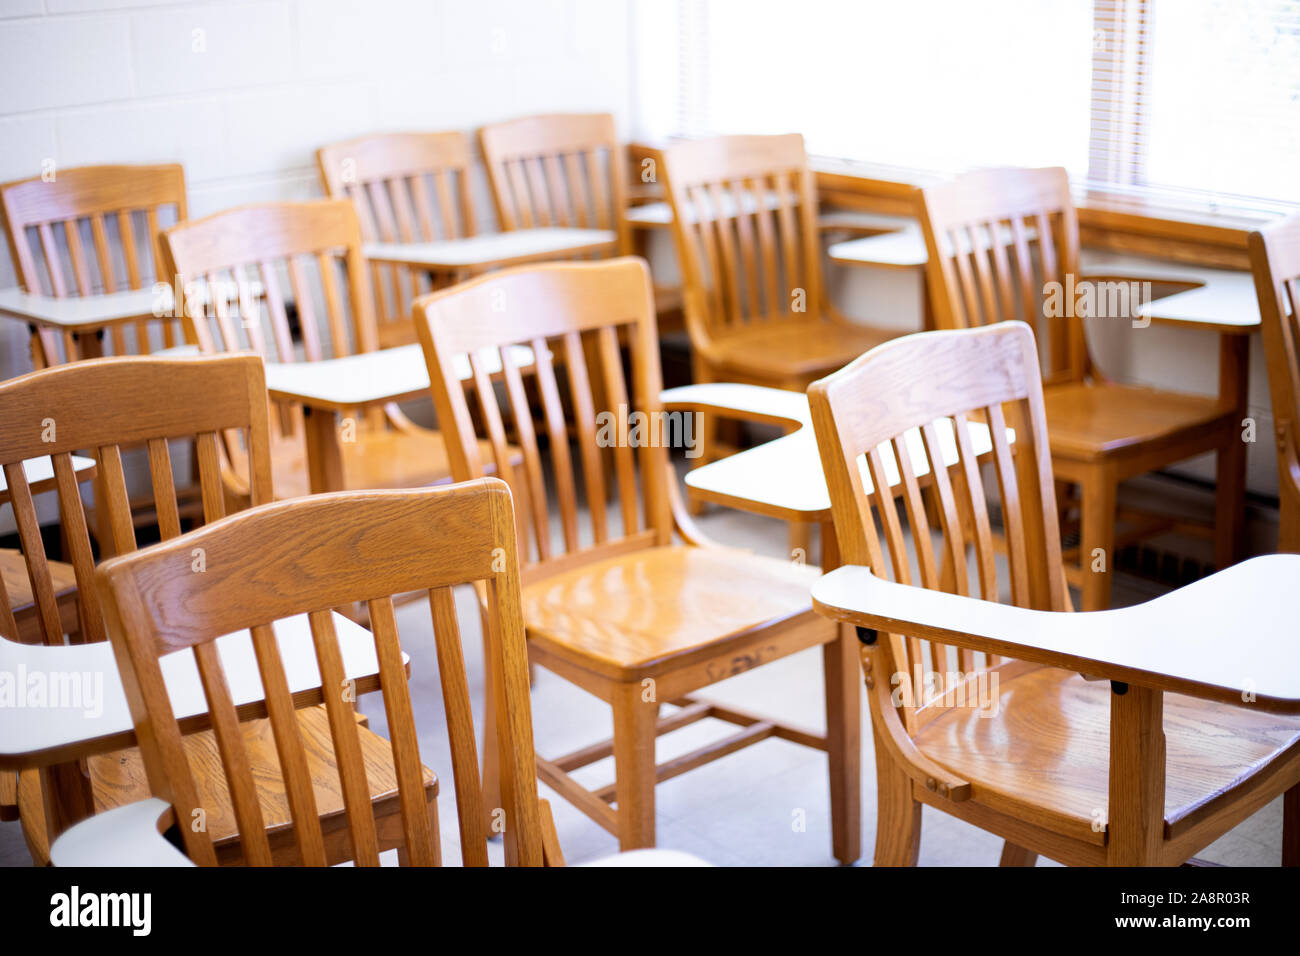 Empty desks in a classroom Stock Photo